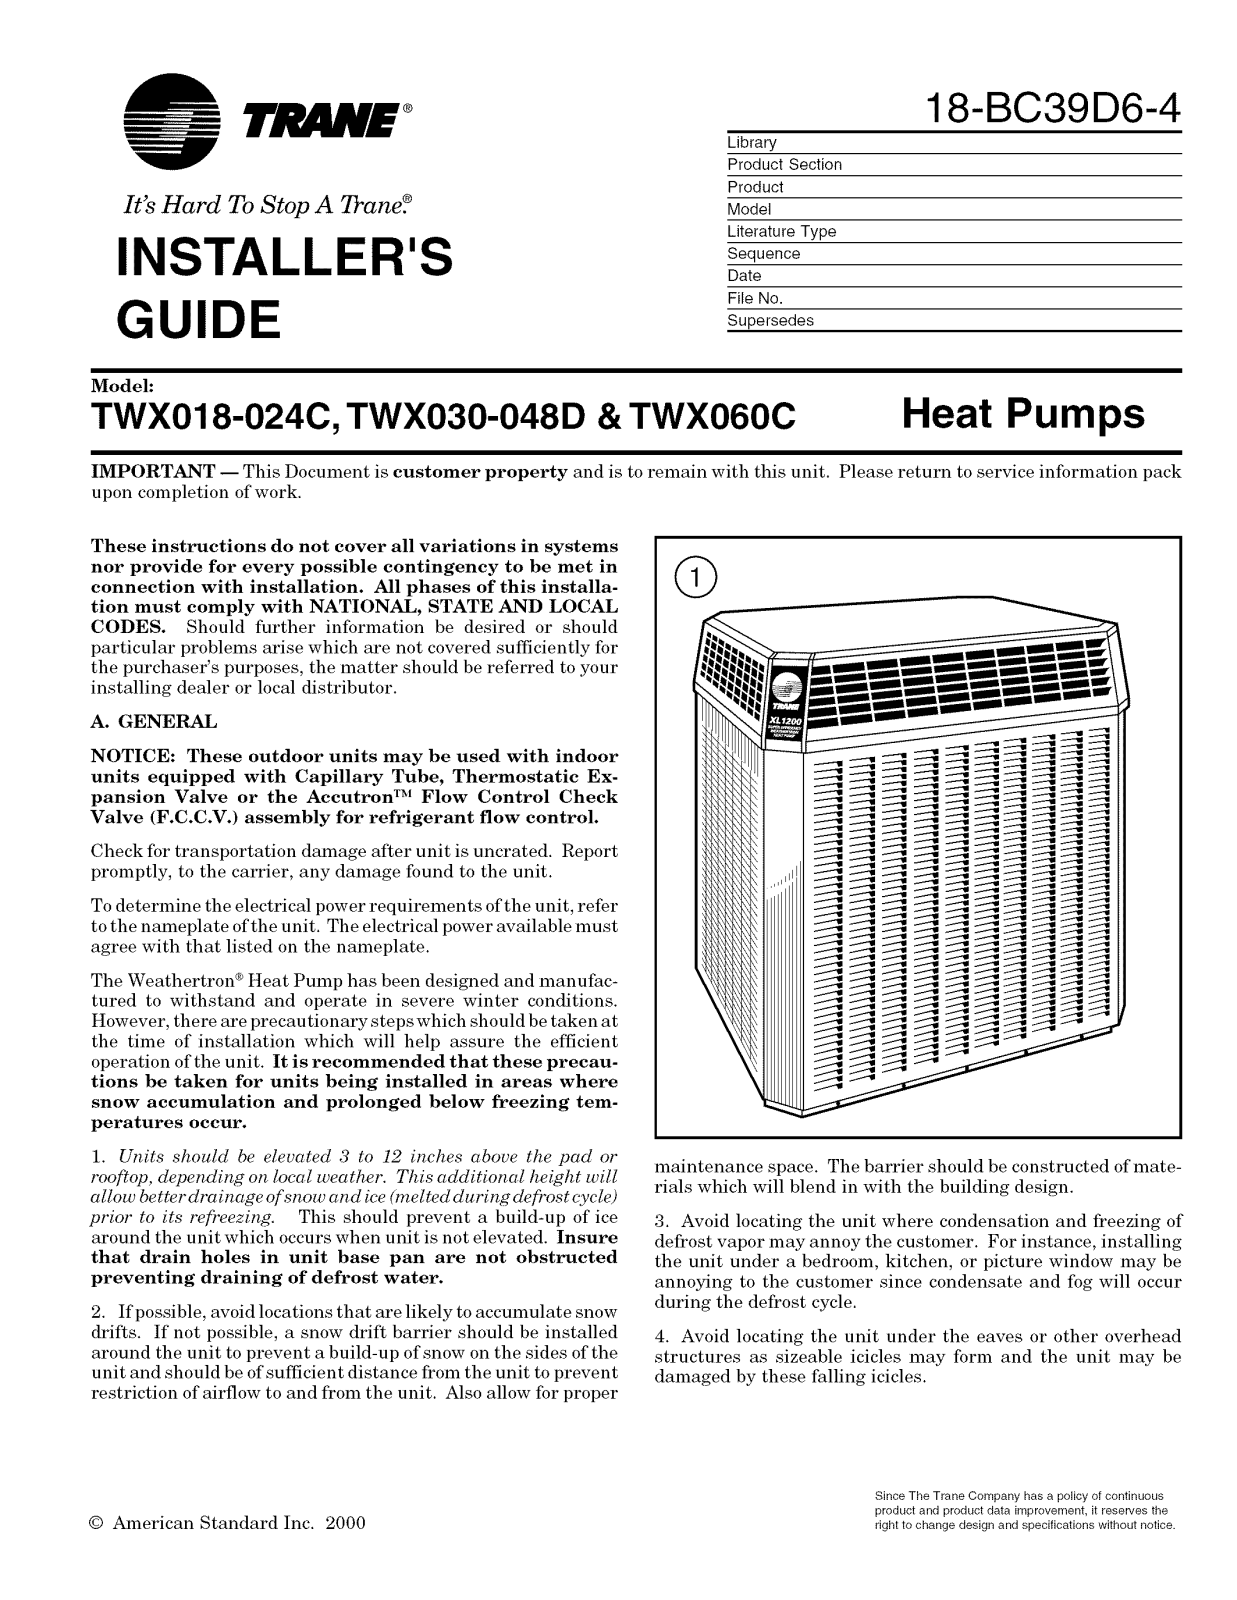 Trane TWX060C, TWX030-048D, TWX018-0240 User Manual